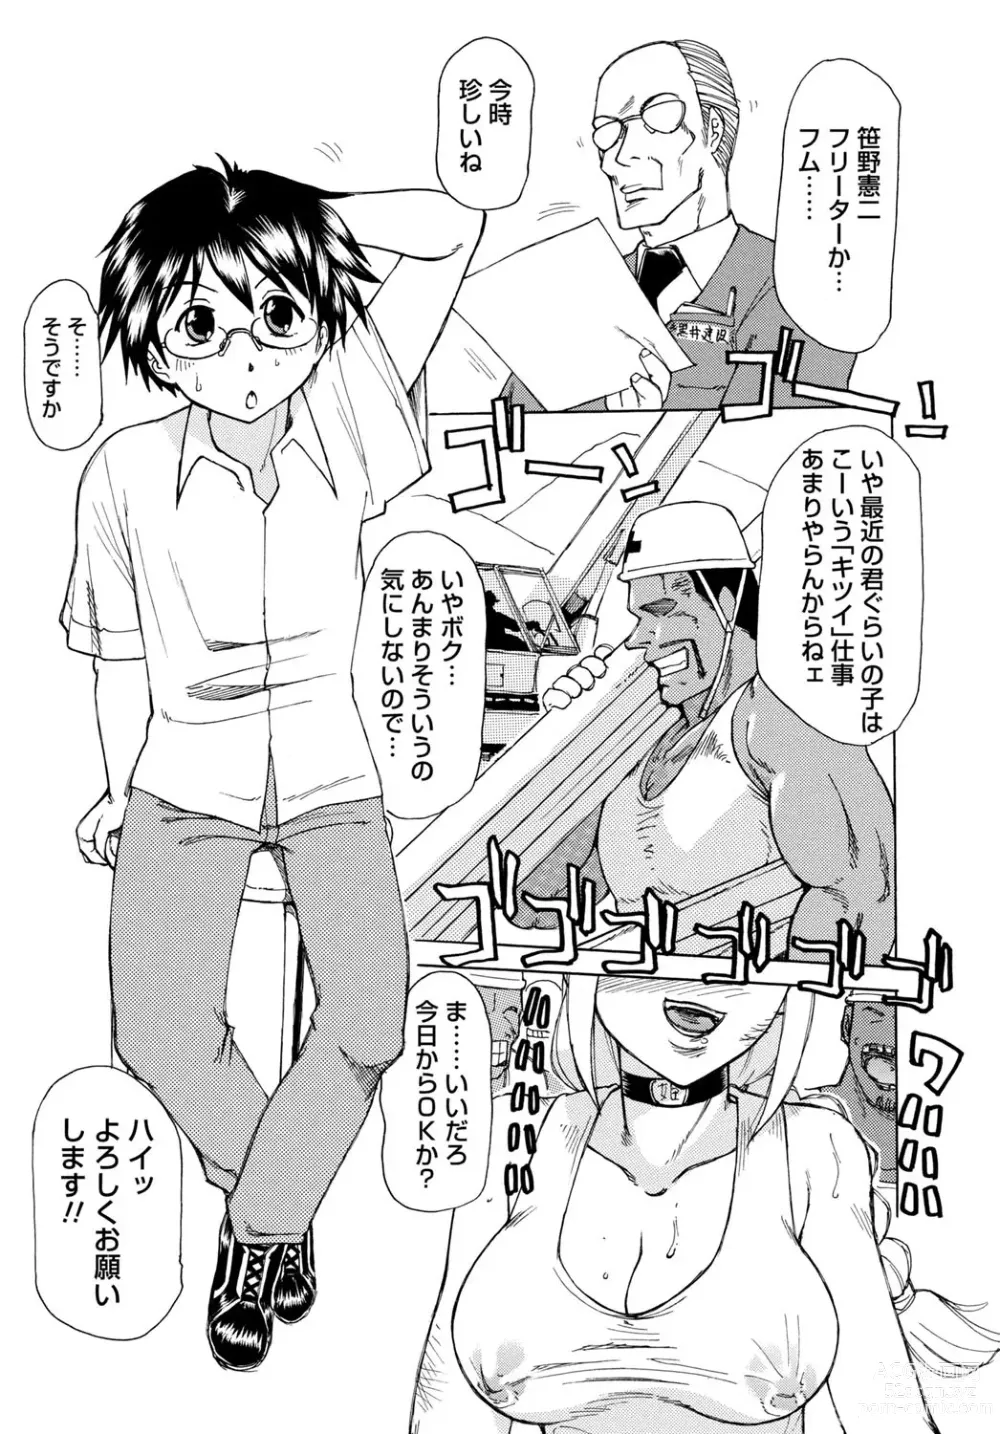 Page 4 of manga Inen Gangu Hime Naburi